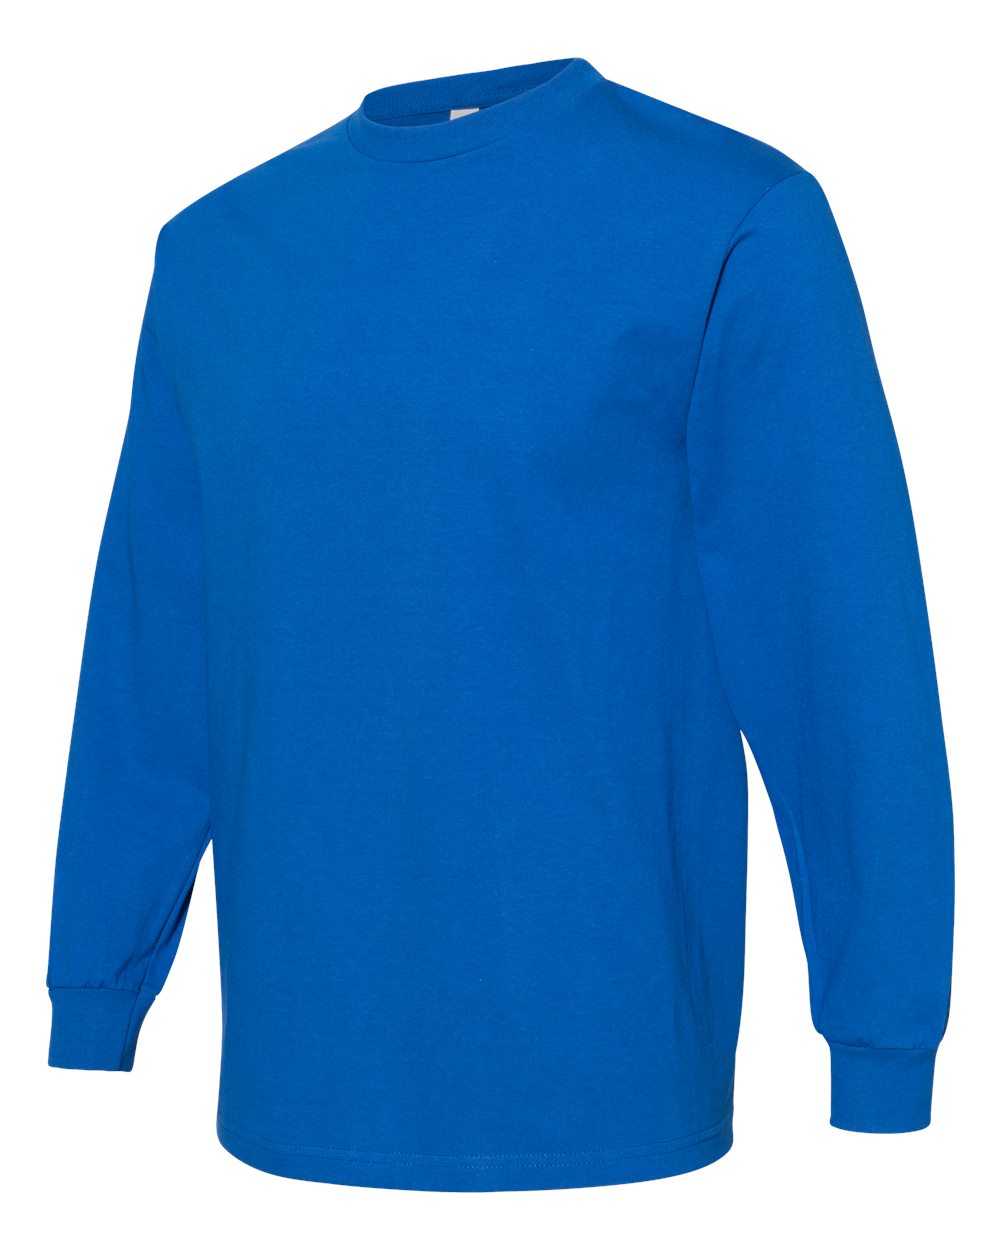 American Apparel 1304 Unisex Heavyweight Cotton Long Sleeve T-Shirt - Royal - HIT a Double